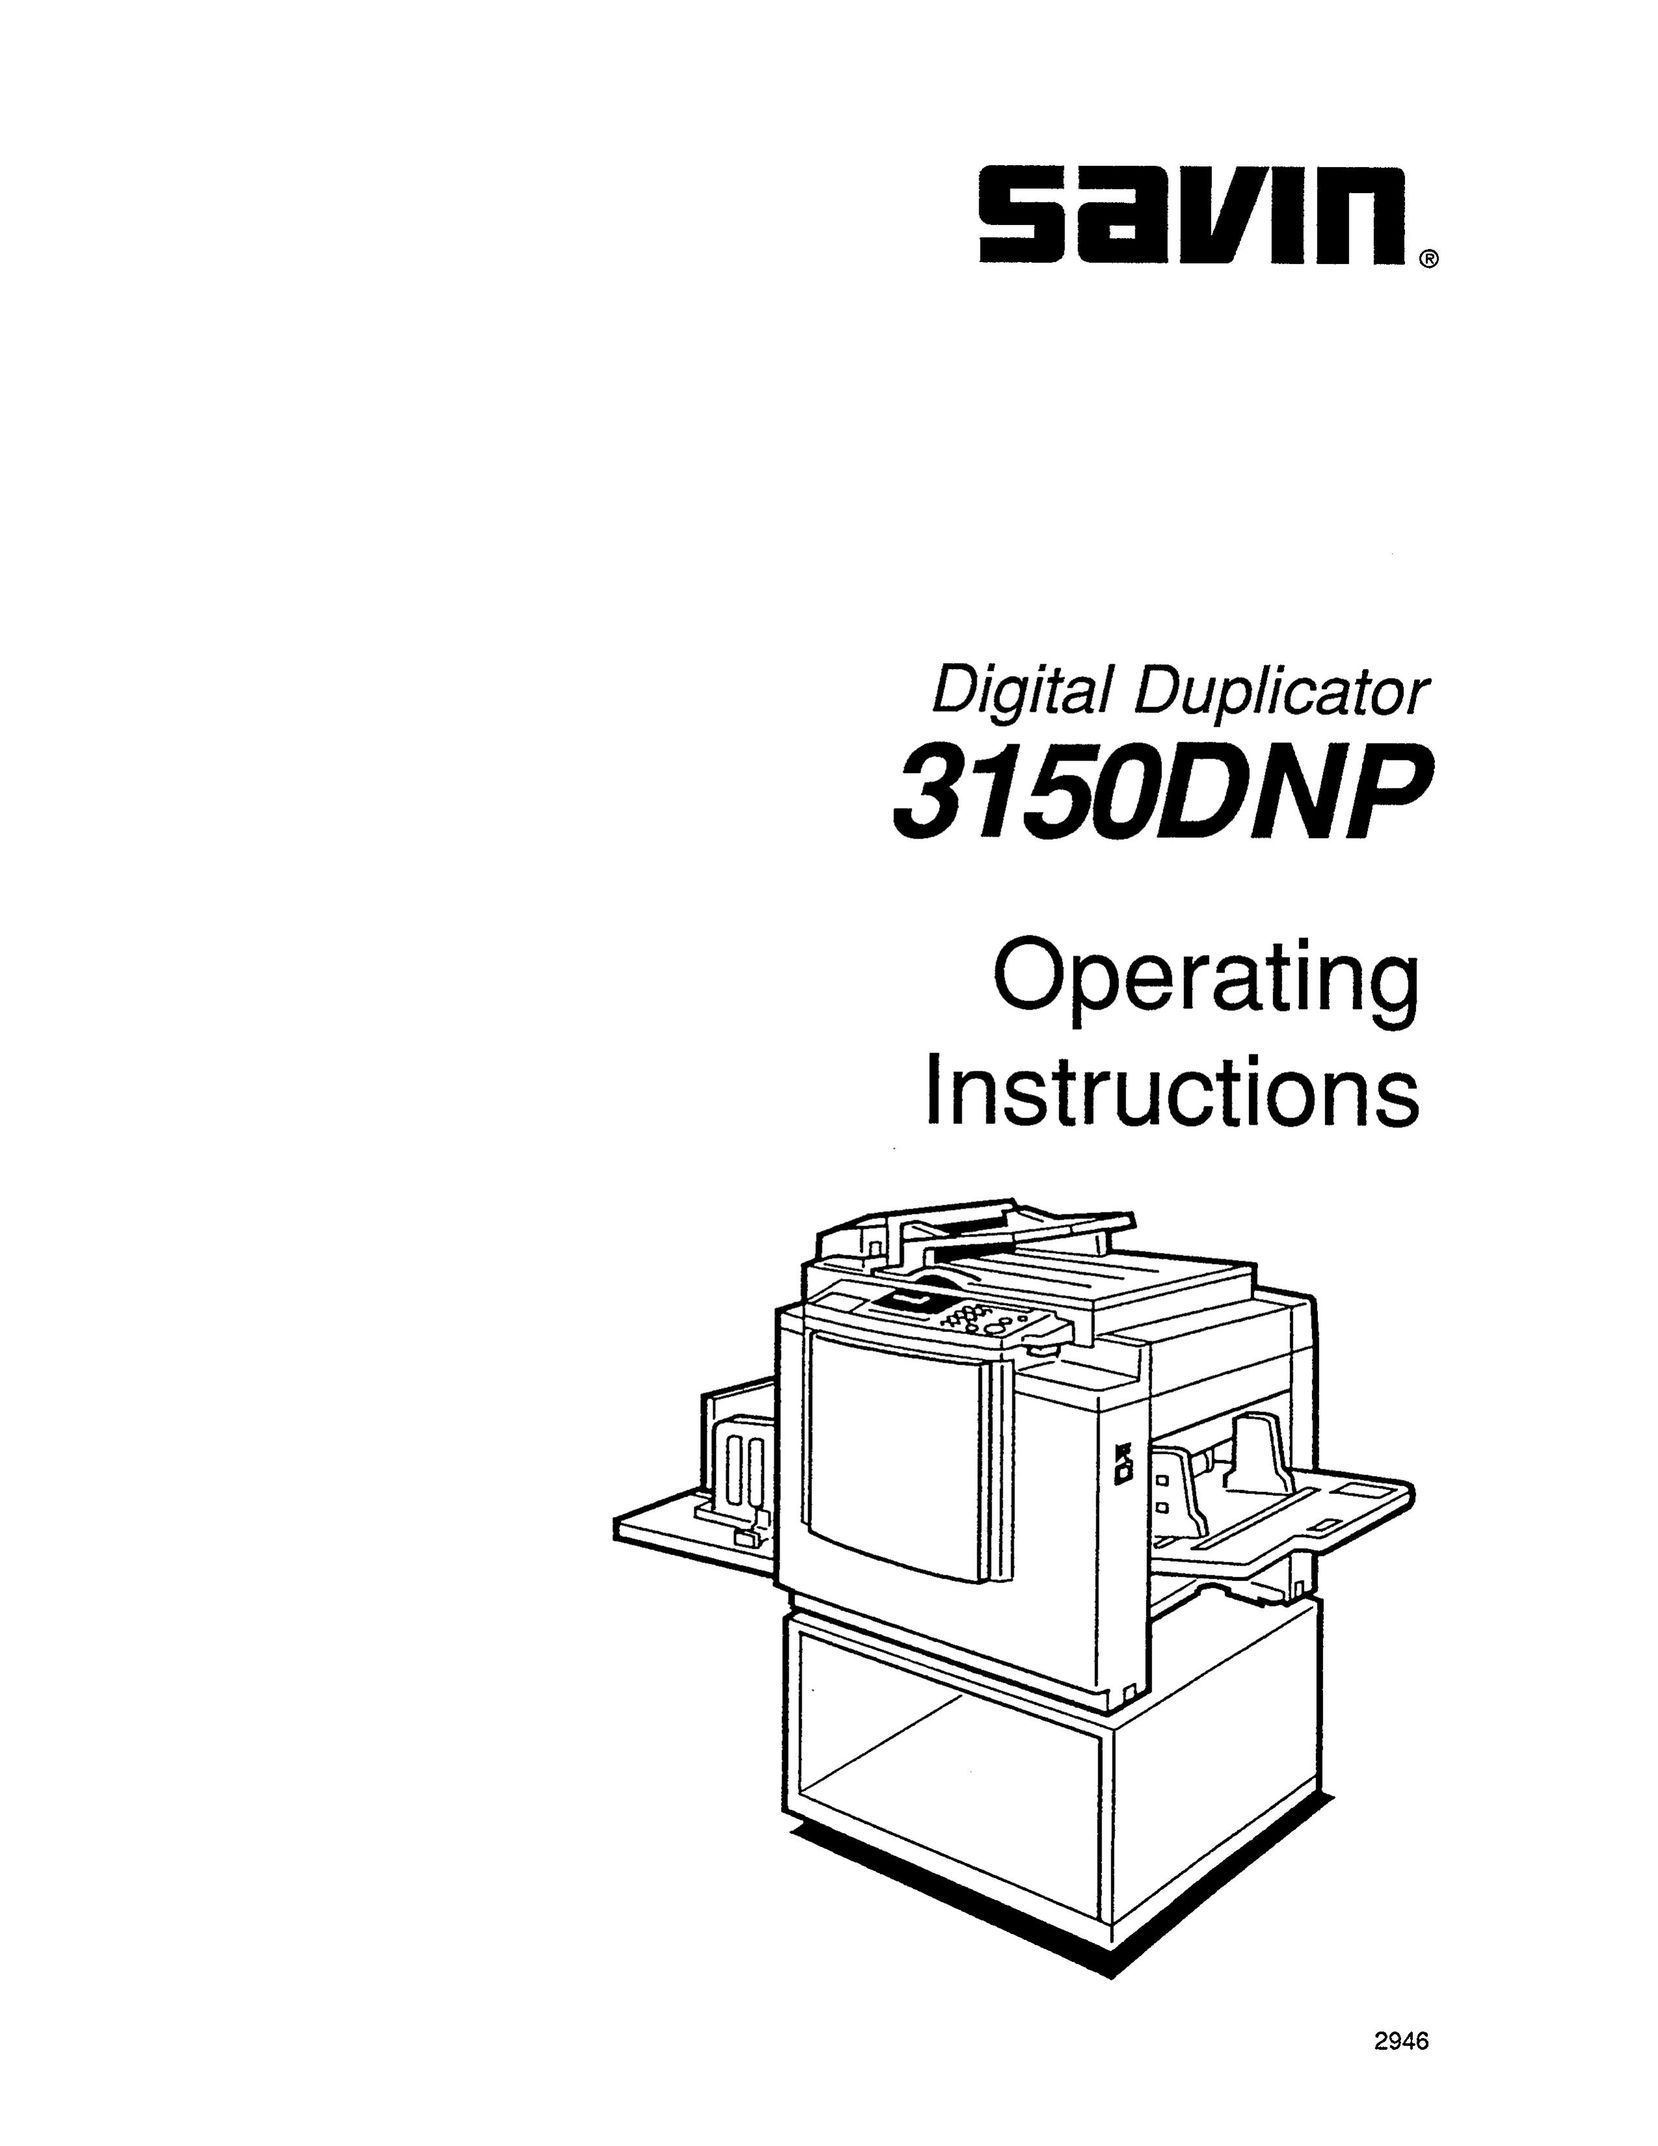 Savin 3150DNP All in One Printer User Manual